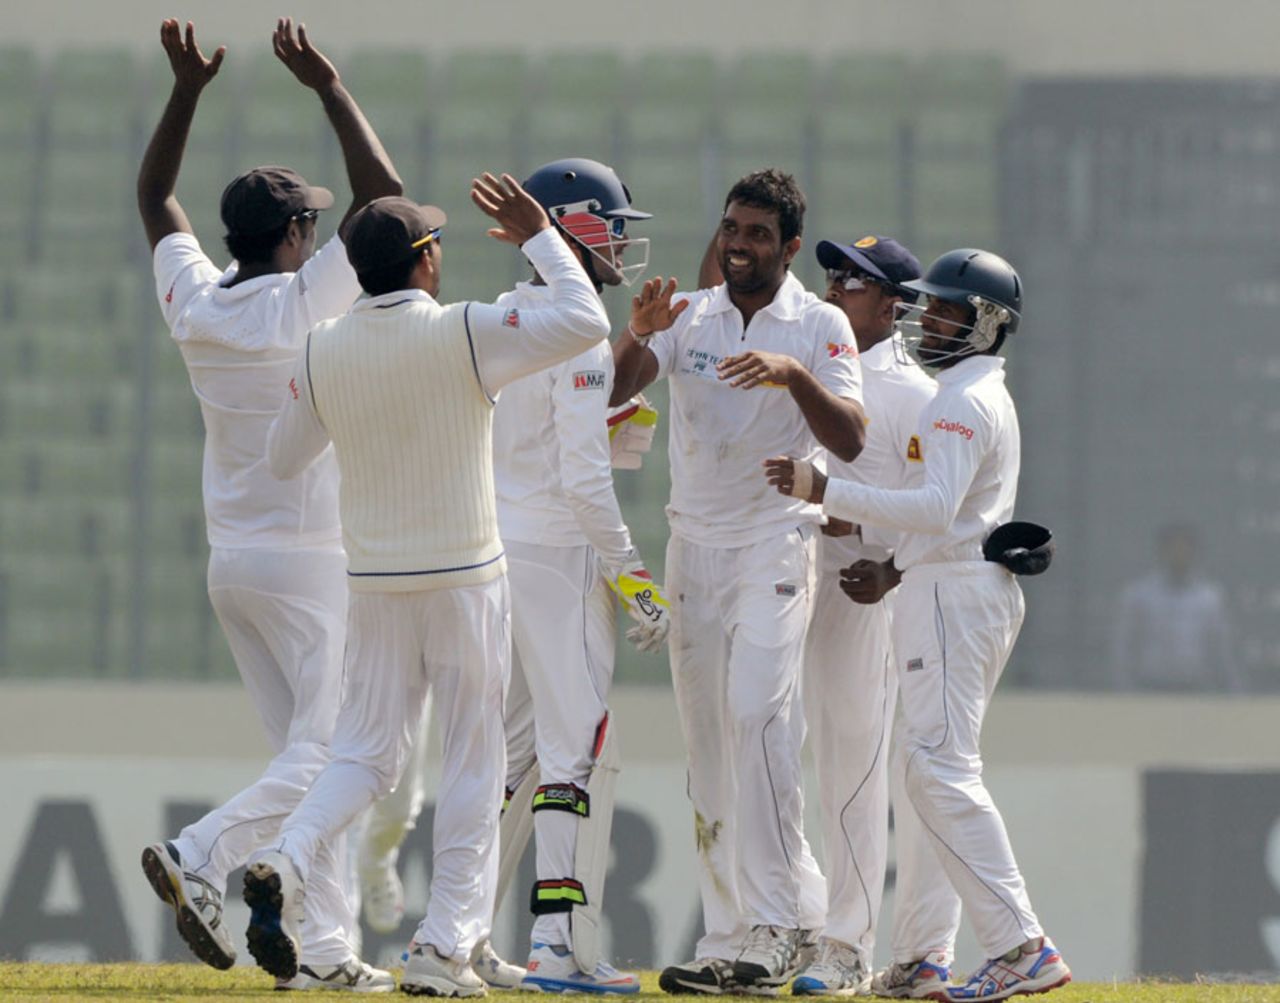 Dilruwan Perera is congratulated after a wicket, Bangladesh v Sri Lanka, 1st Test, Mirpur, 4th day, January 30, 2014